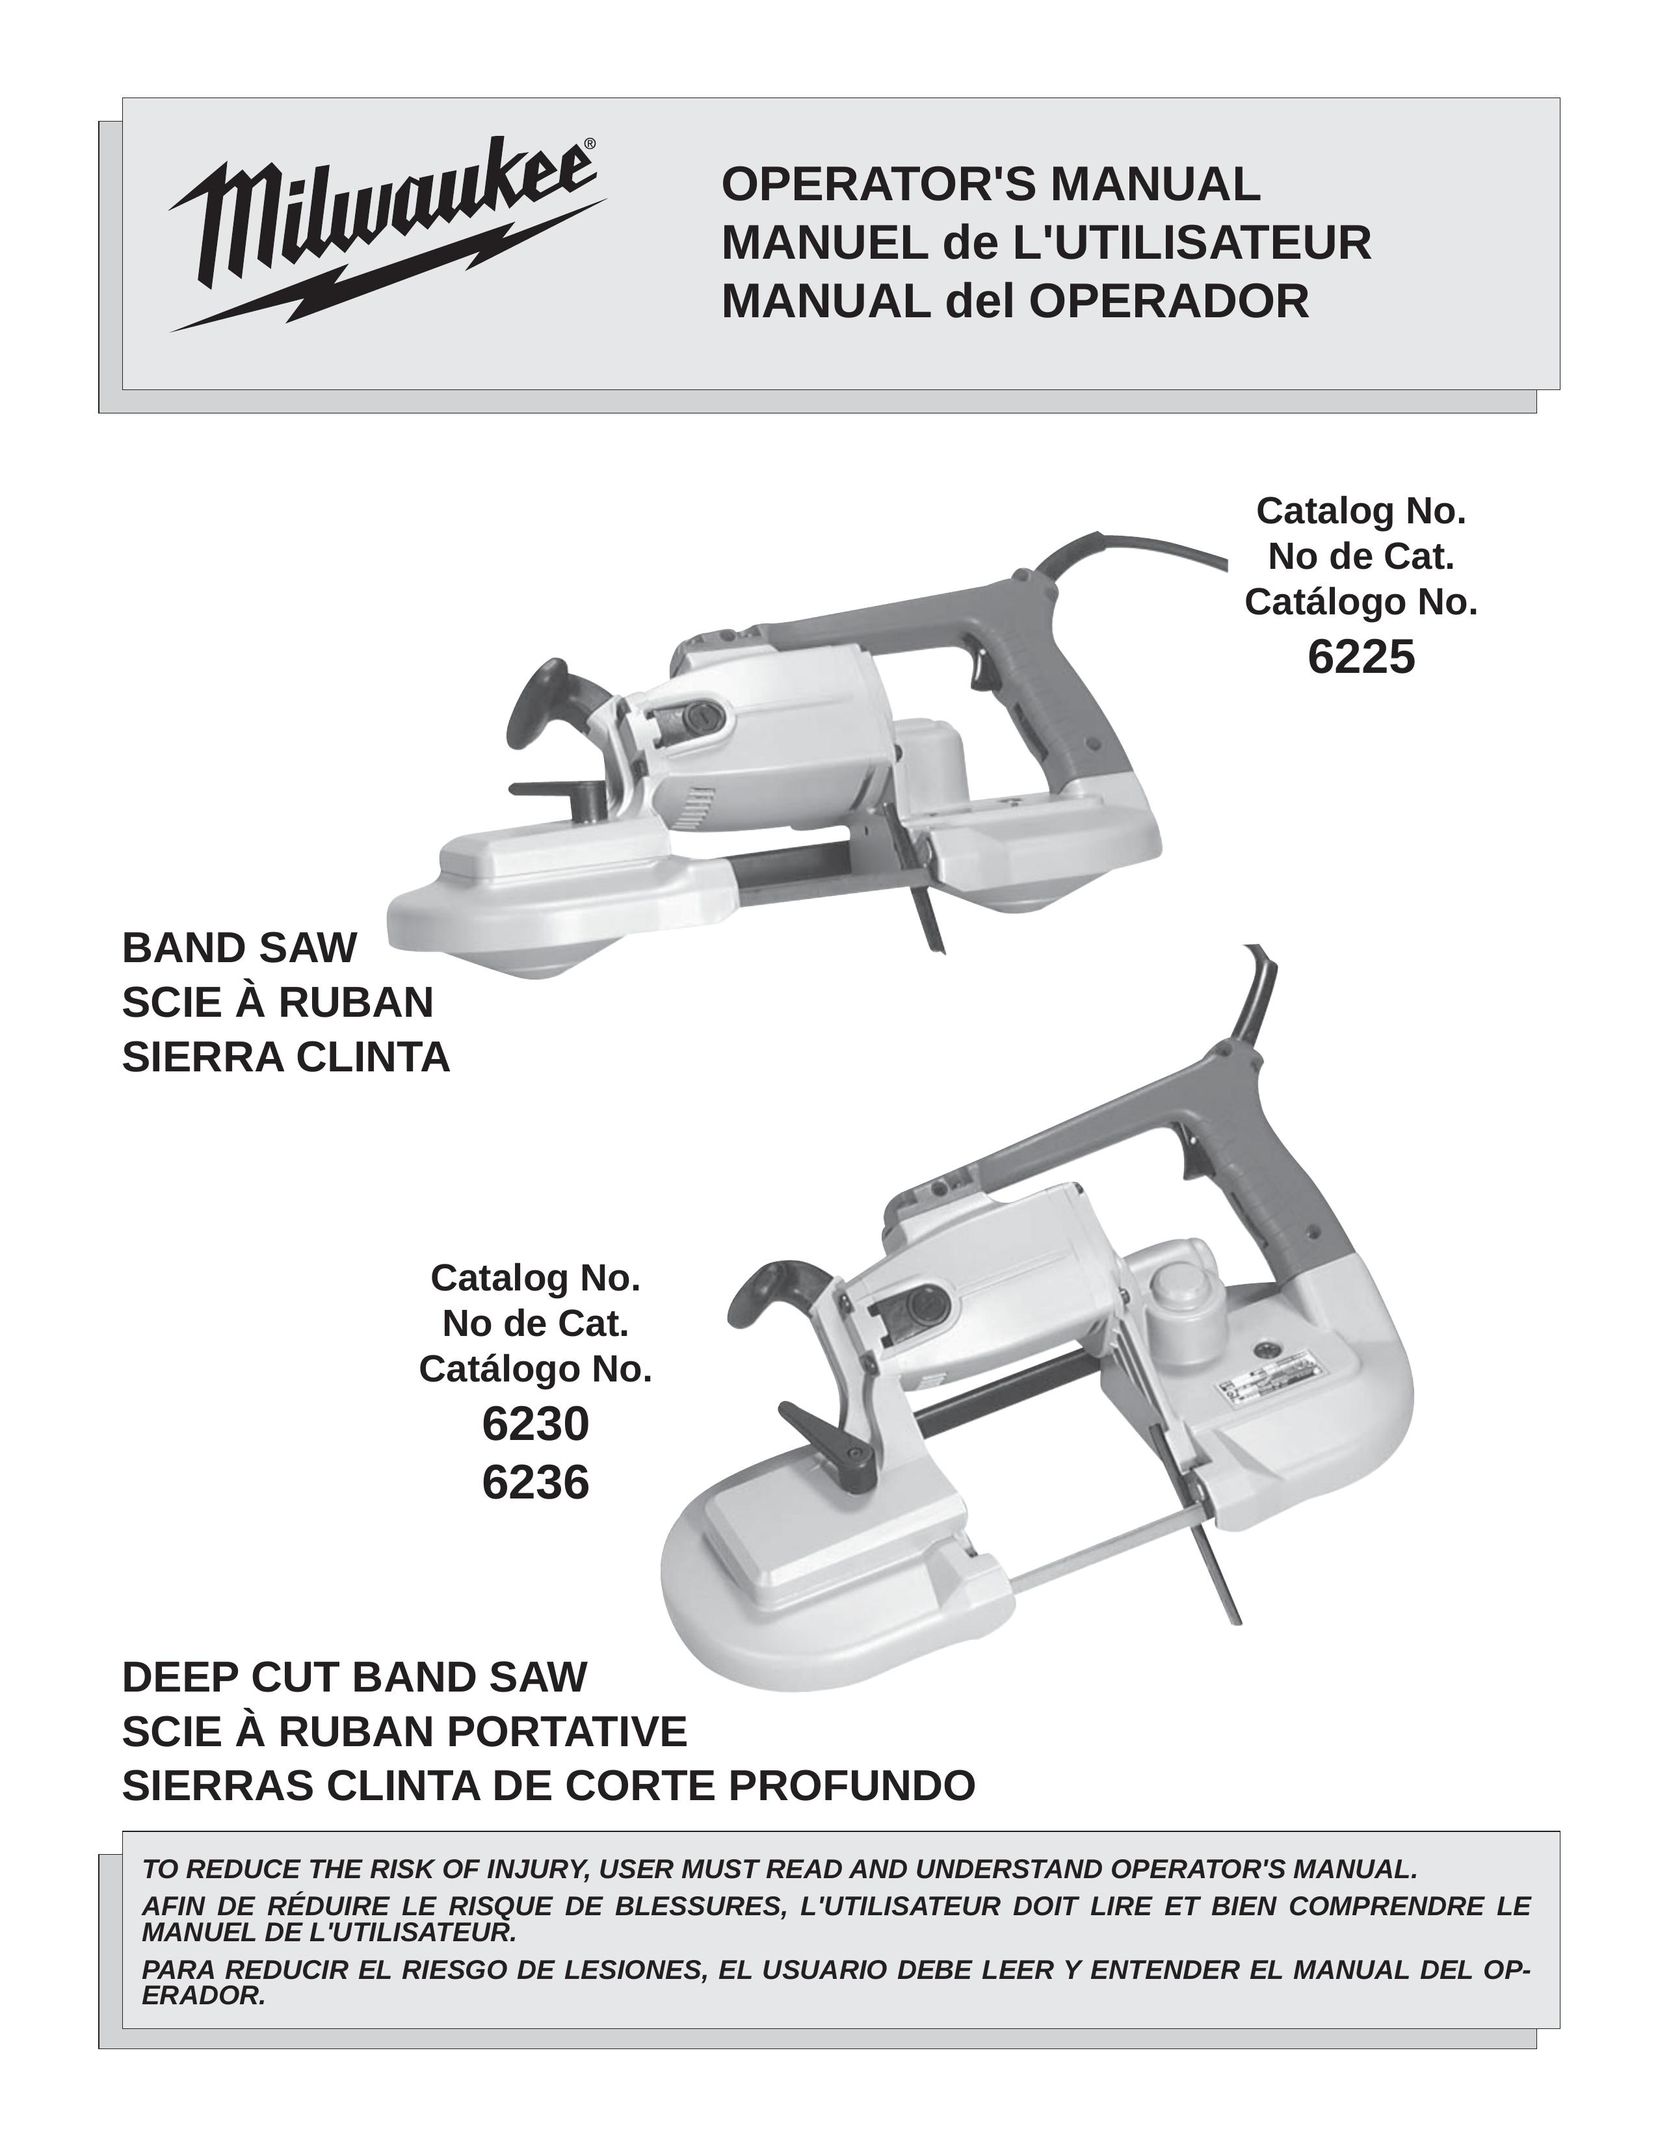 Milwaukee 6236 Saw User Manual